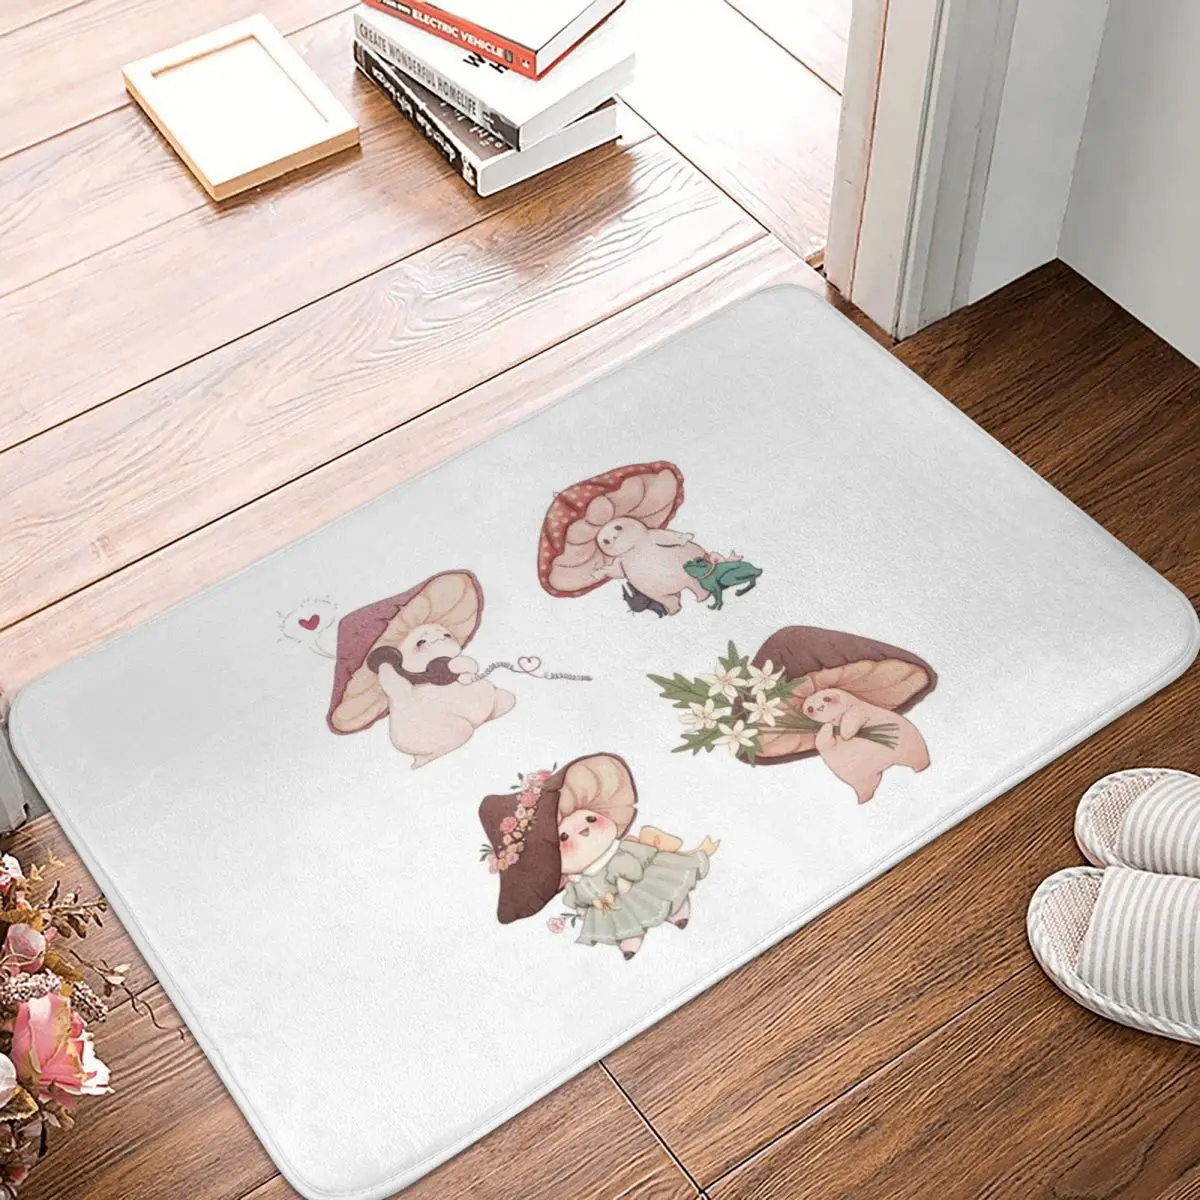 

Four Vibrant Mushrooms Friends Doormat Carpet Mat Rug Polyester PVC Anti-slip Floor Decor Bath Bathroom Kitchen Living Room